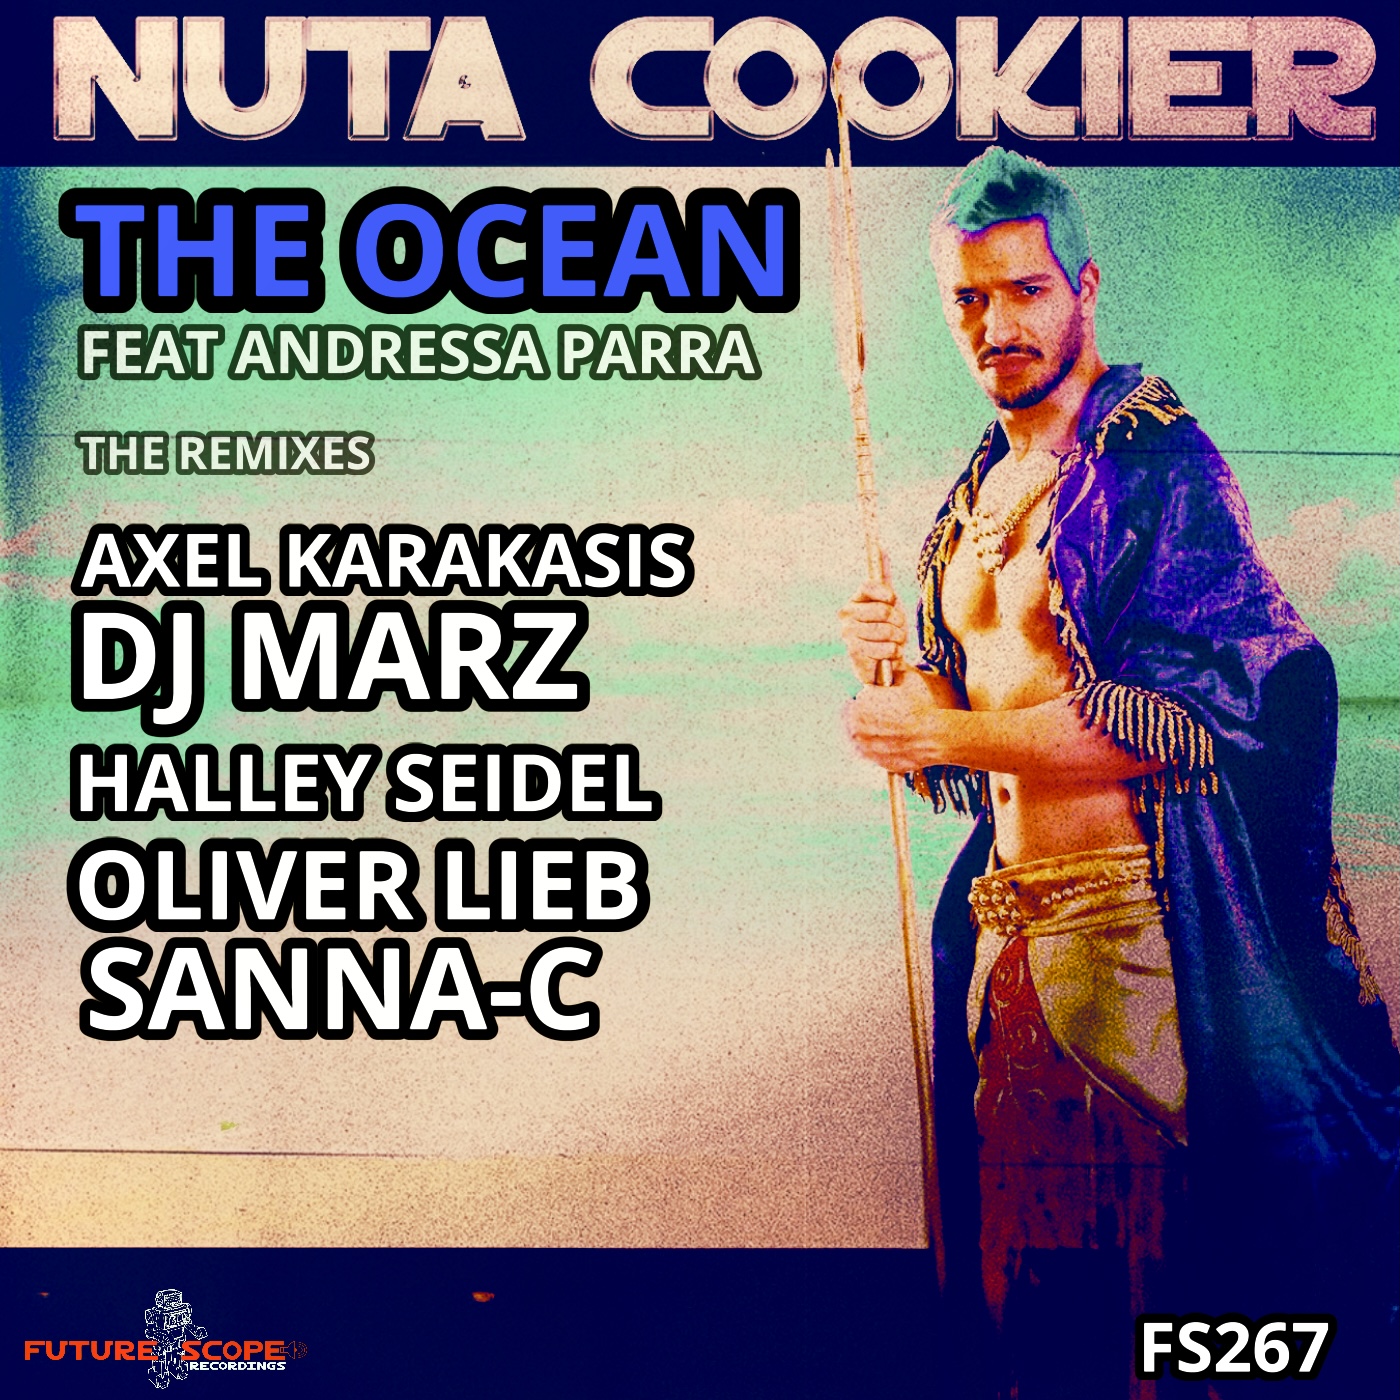 Nuta Cookier presents 7 amazing remixes of his single "The Ocean" feat. Andressa Parra